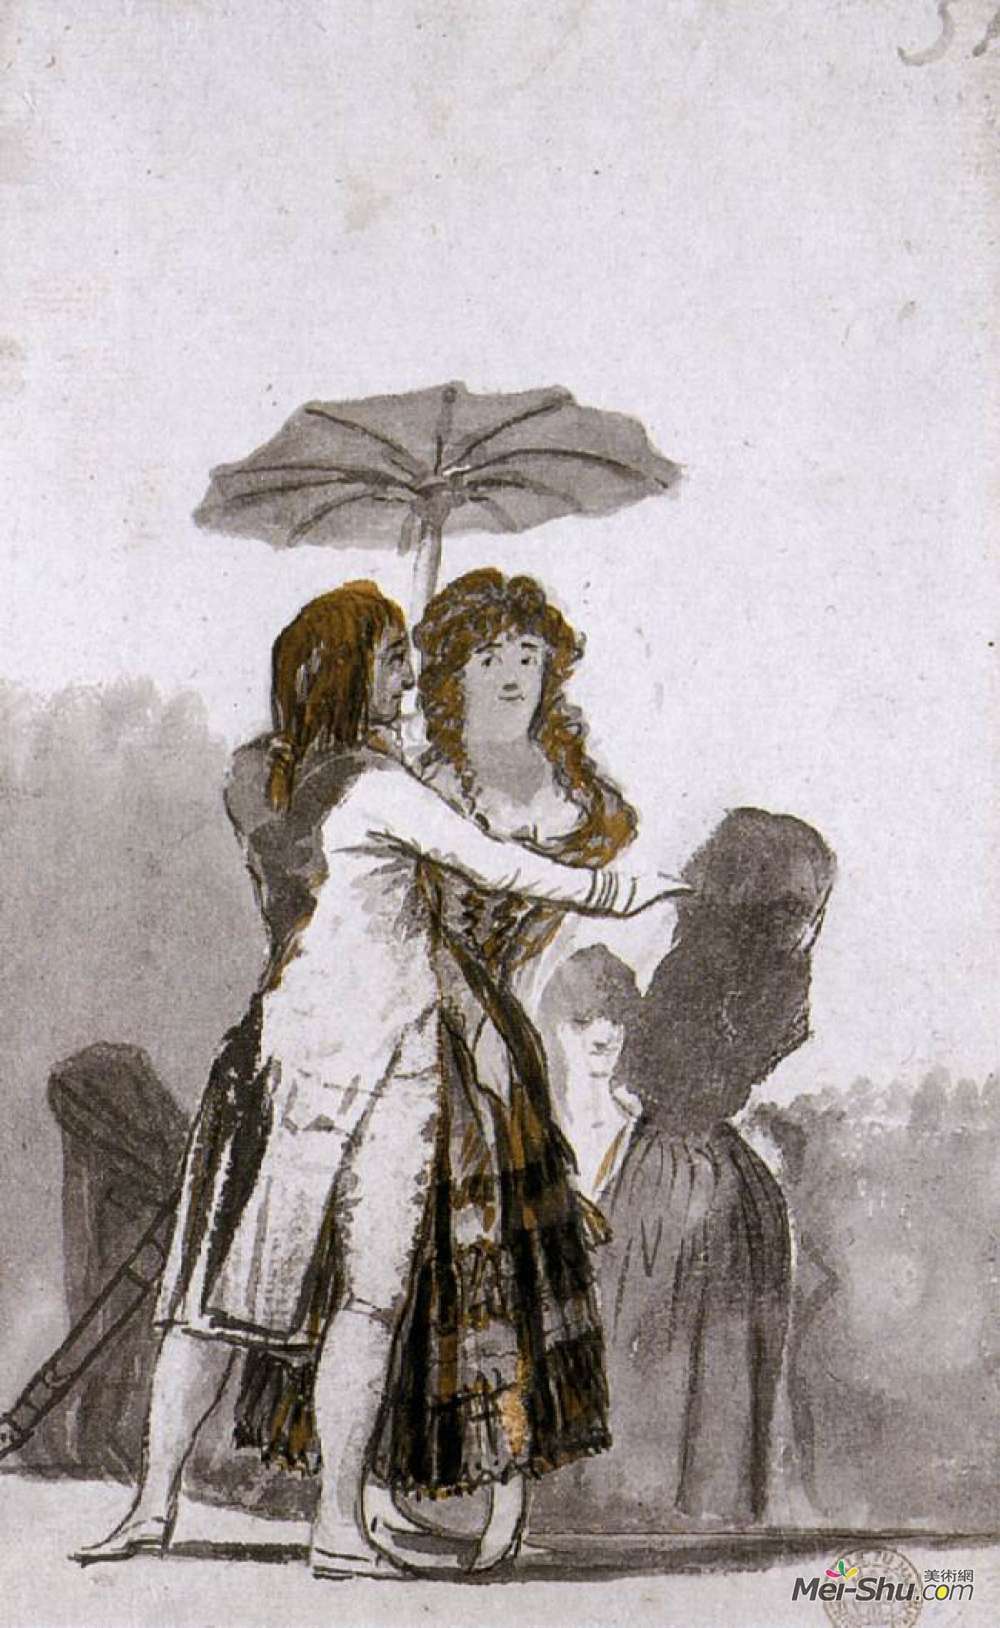 弗朗西斯科·戈雅(francisco goya)高清作品《couple with parasol on